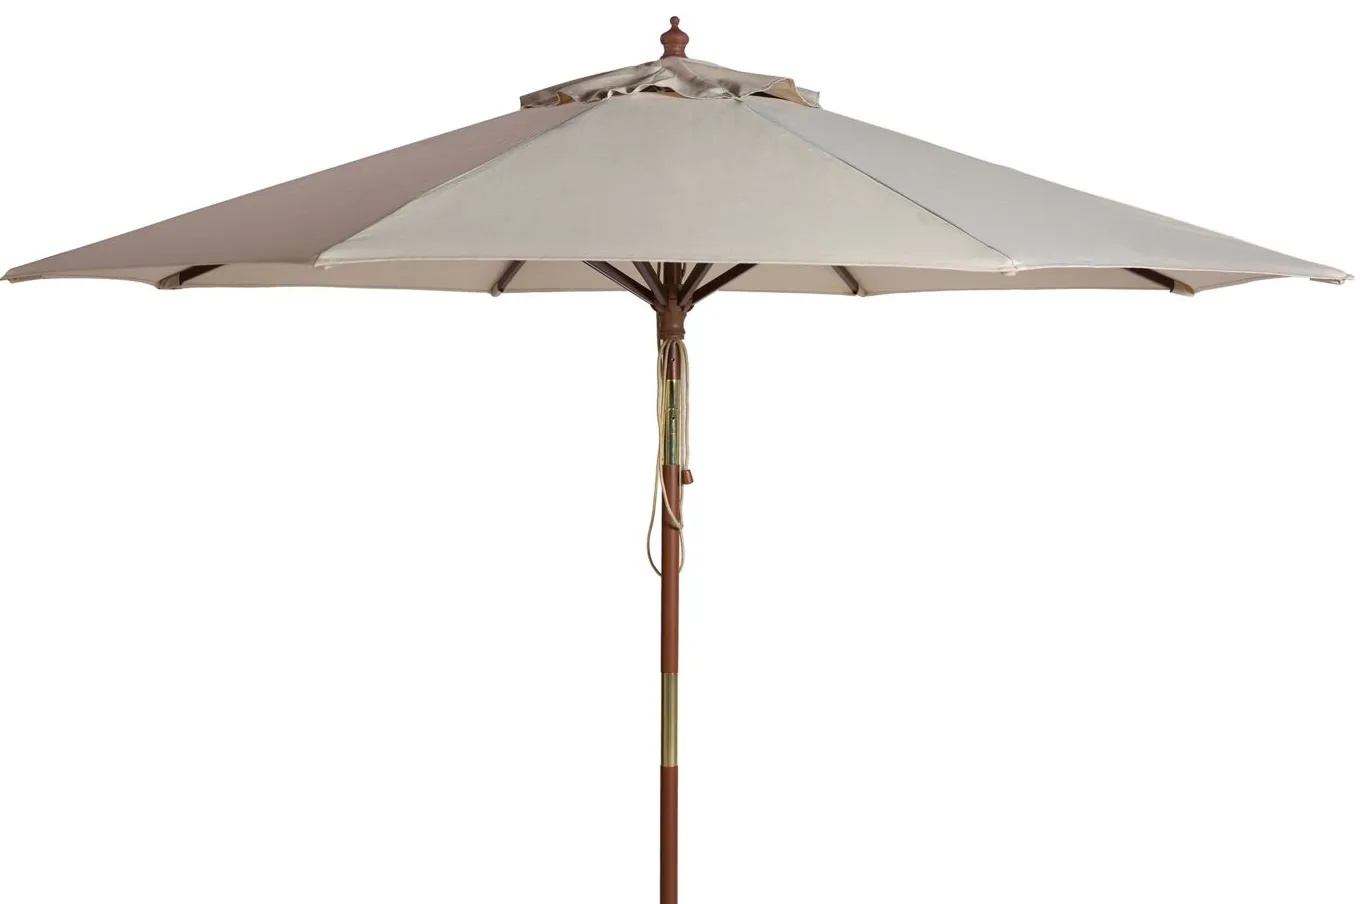 Bethany Outdoor Wooden Umbrella in Gray/Brown/Beige by Safavieh